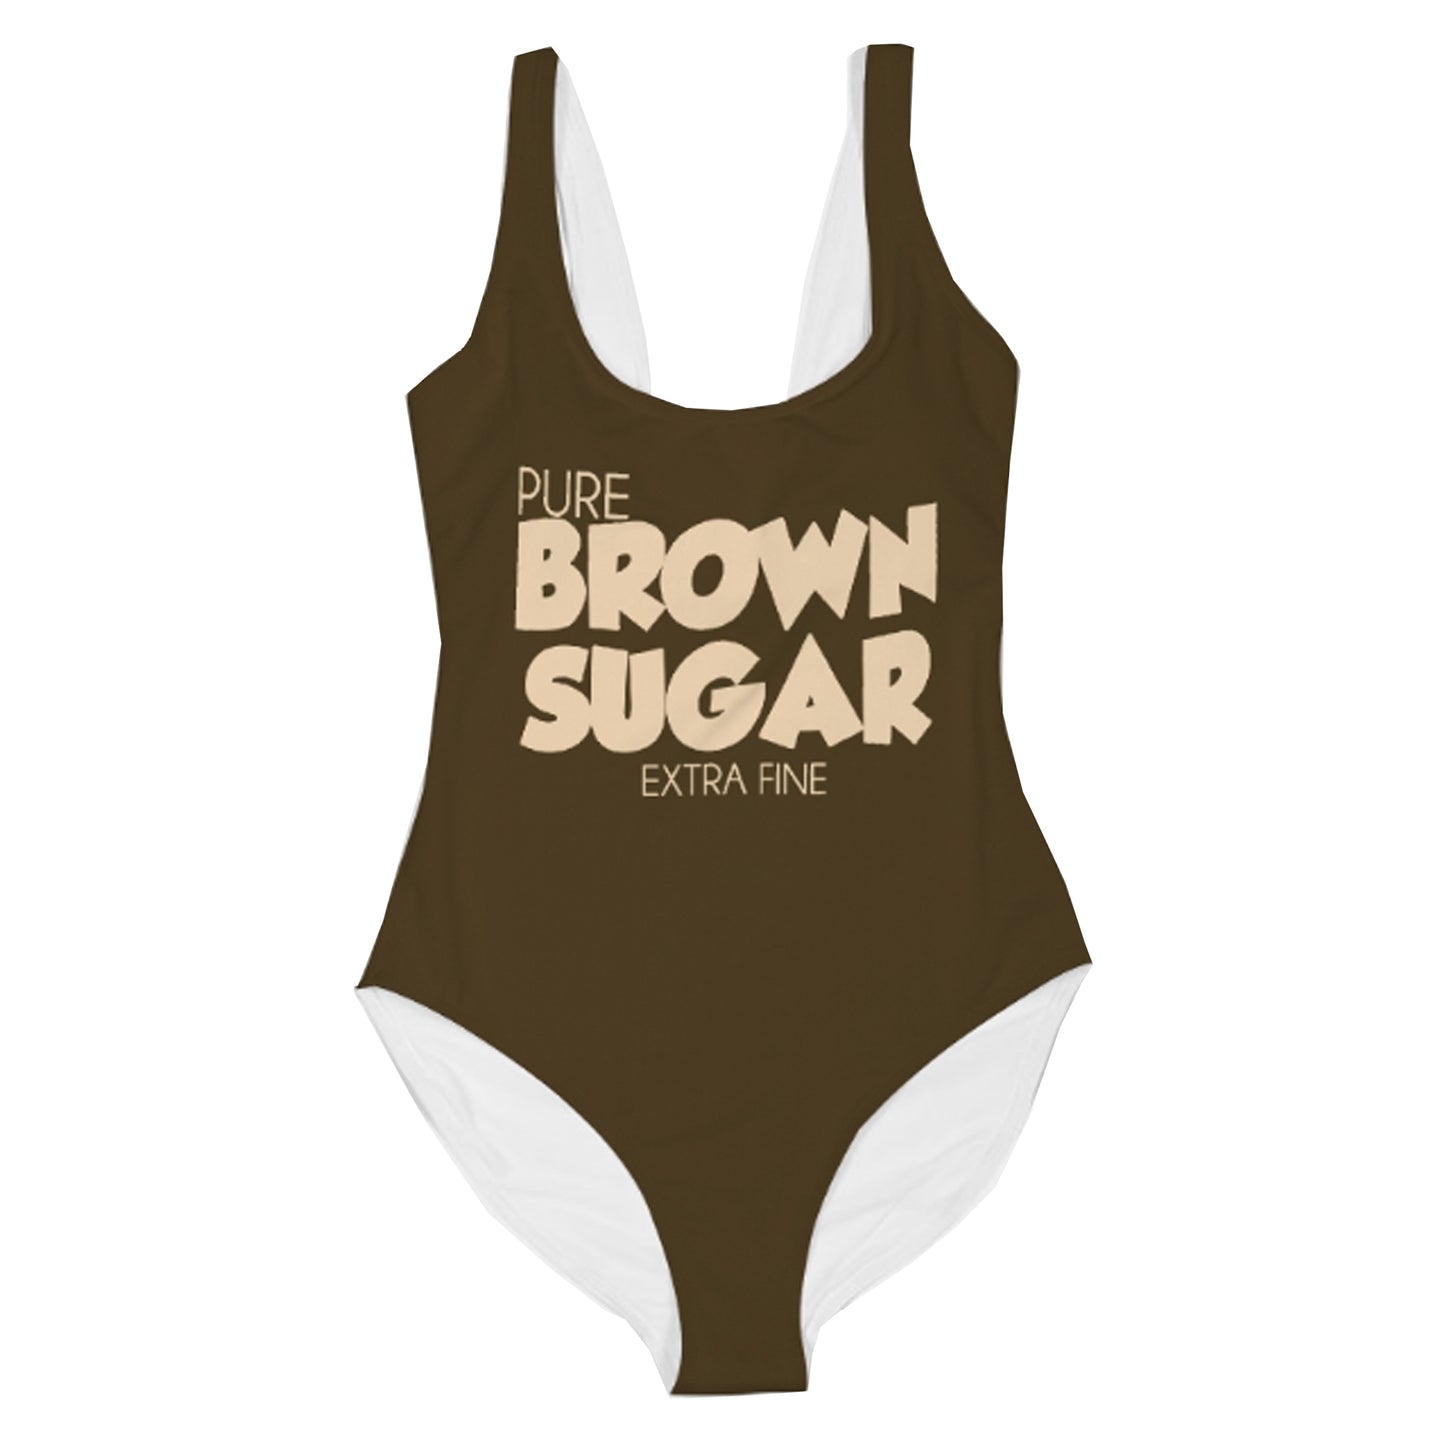 "Brown Sugar" Swimsuit